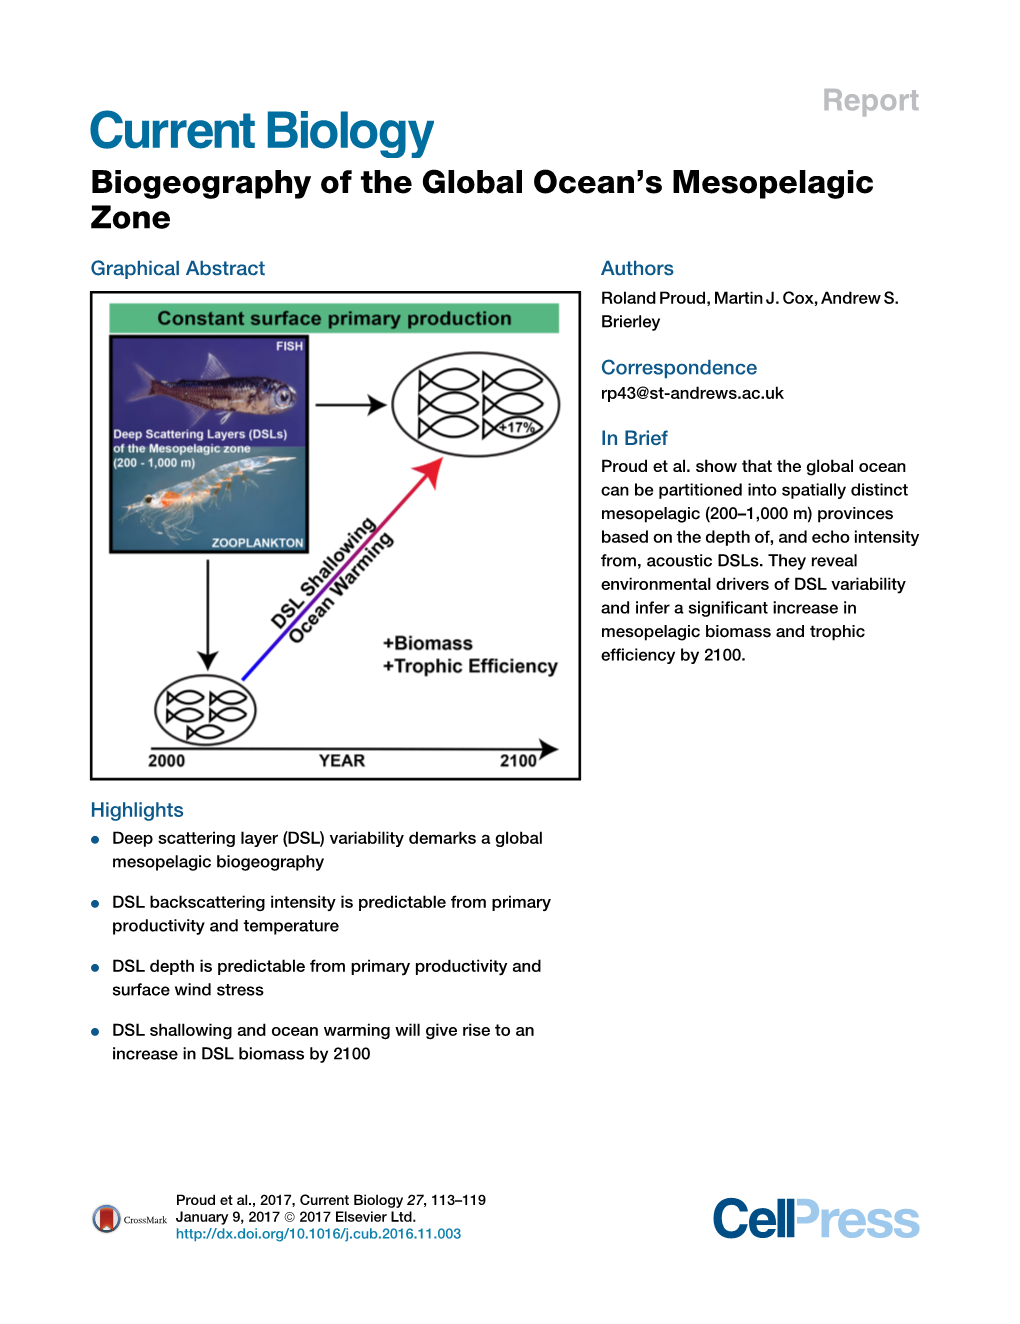 Biogeography of the Global Ocean's Mesopelagic Zone